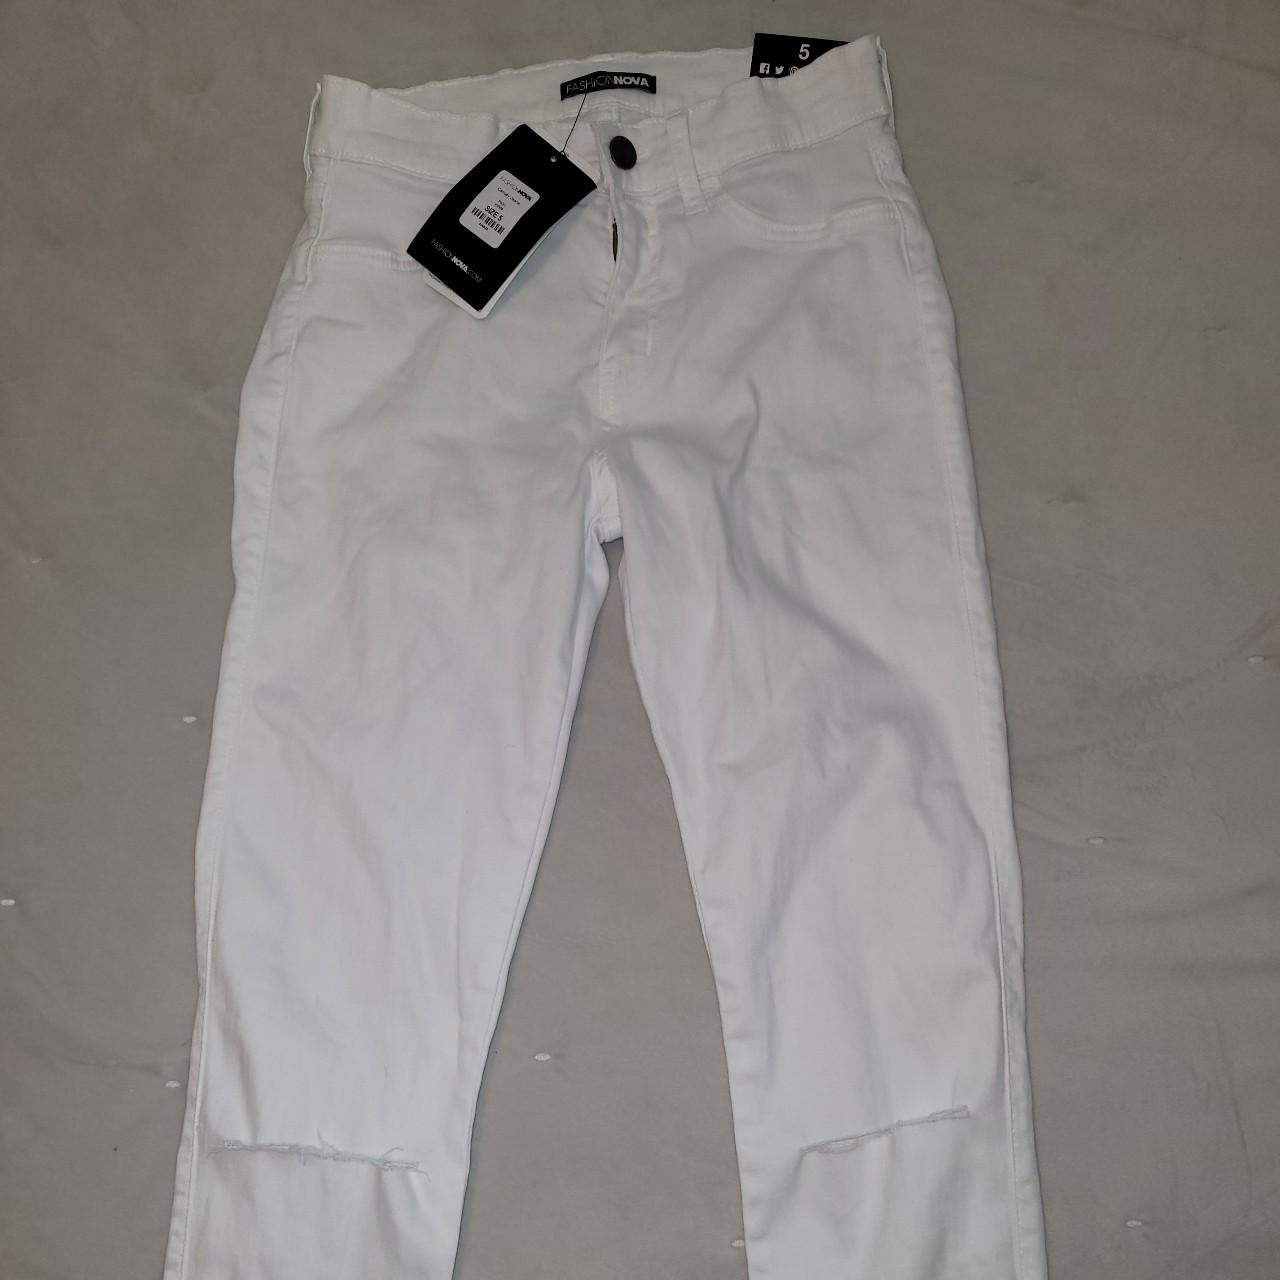 Fashion Nova Canopy Jeans White Size 5